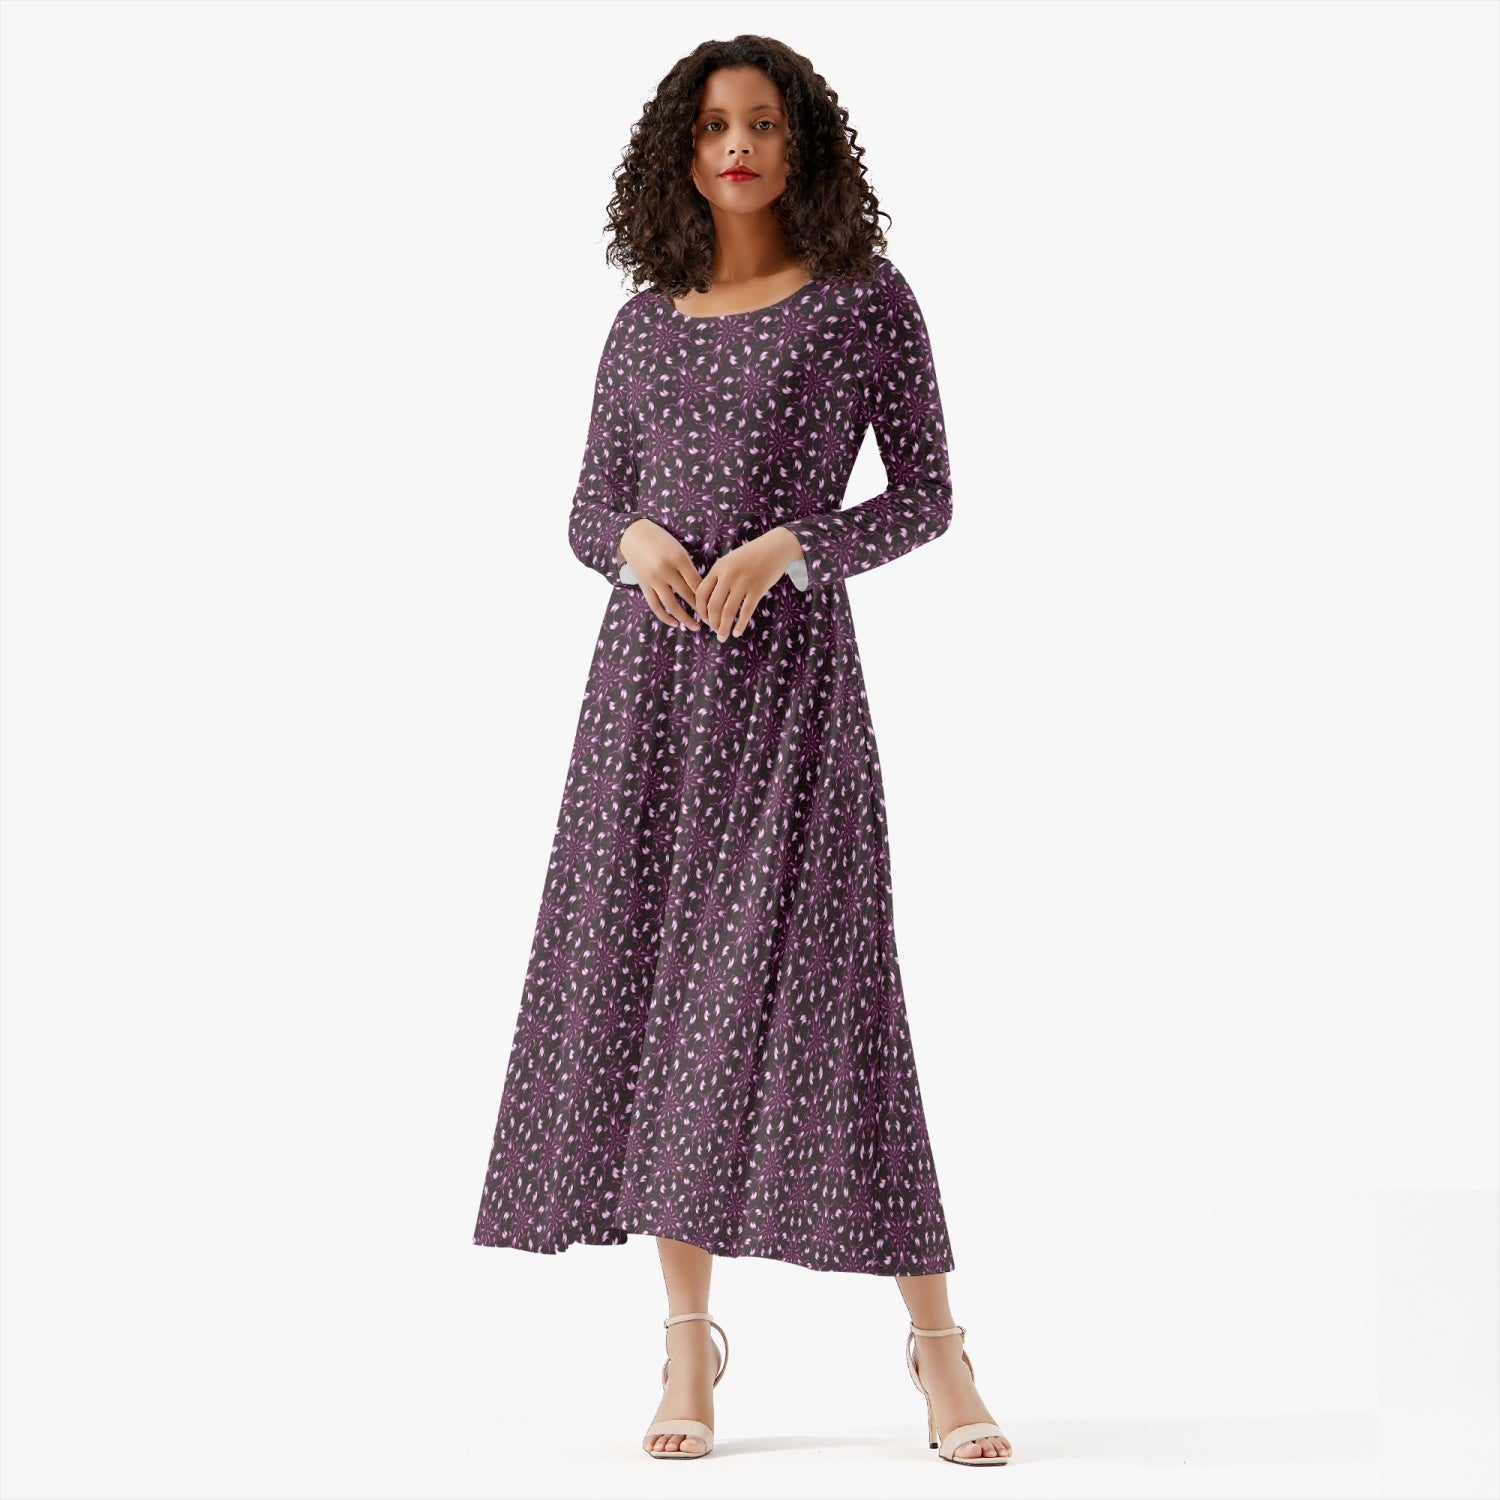 Deep Purple patterned Trendy autumn 2022 Women's Long-Sleeve One-piece Dress, by Sensus Studio Design